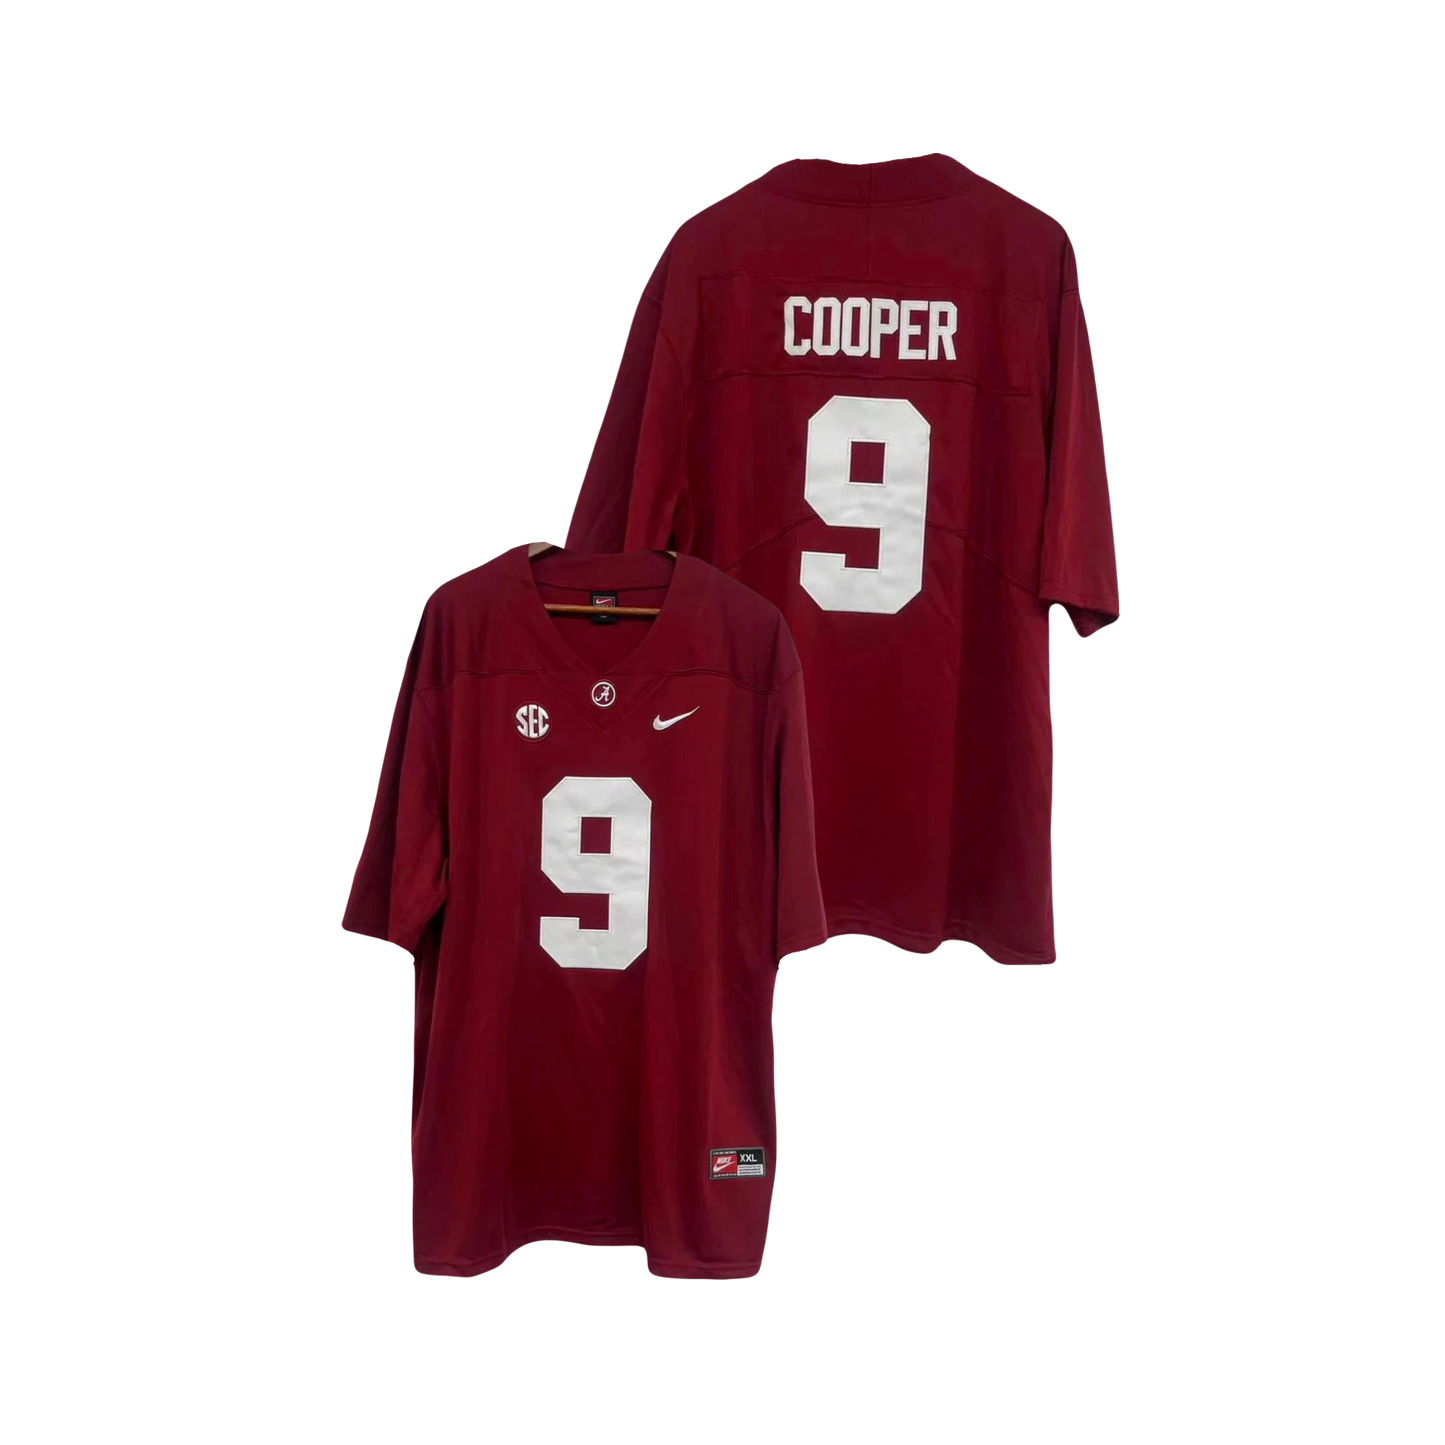 Amari Cooper Alabama Crimson Tide Nike NCAA Campus Legends Home Jersey